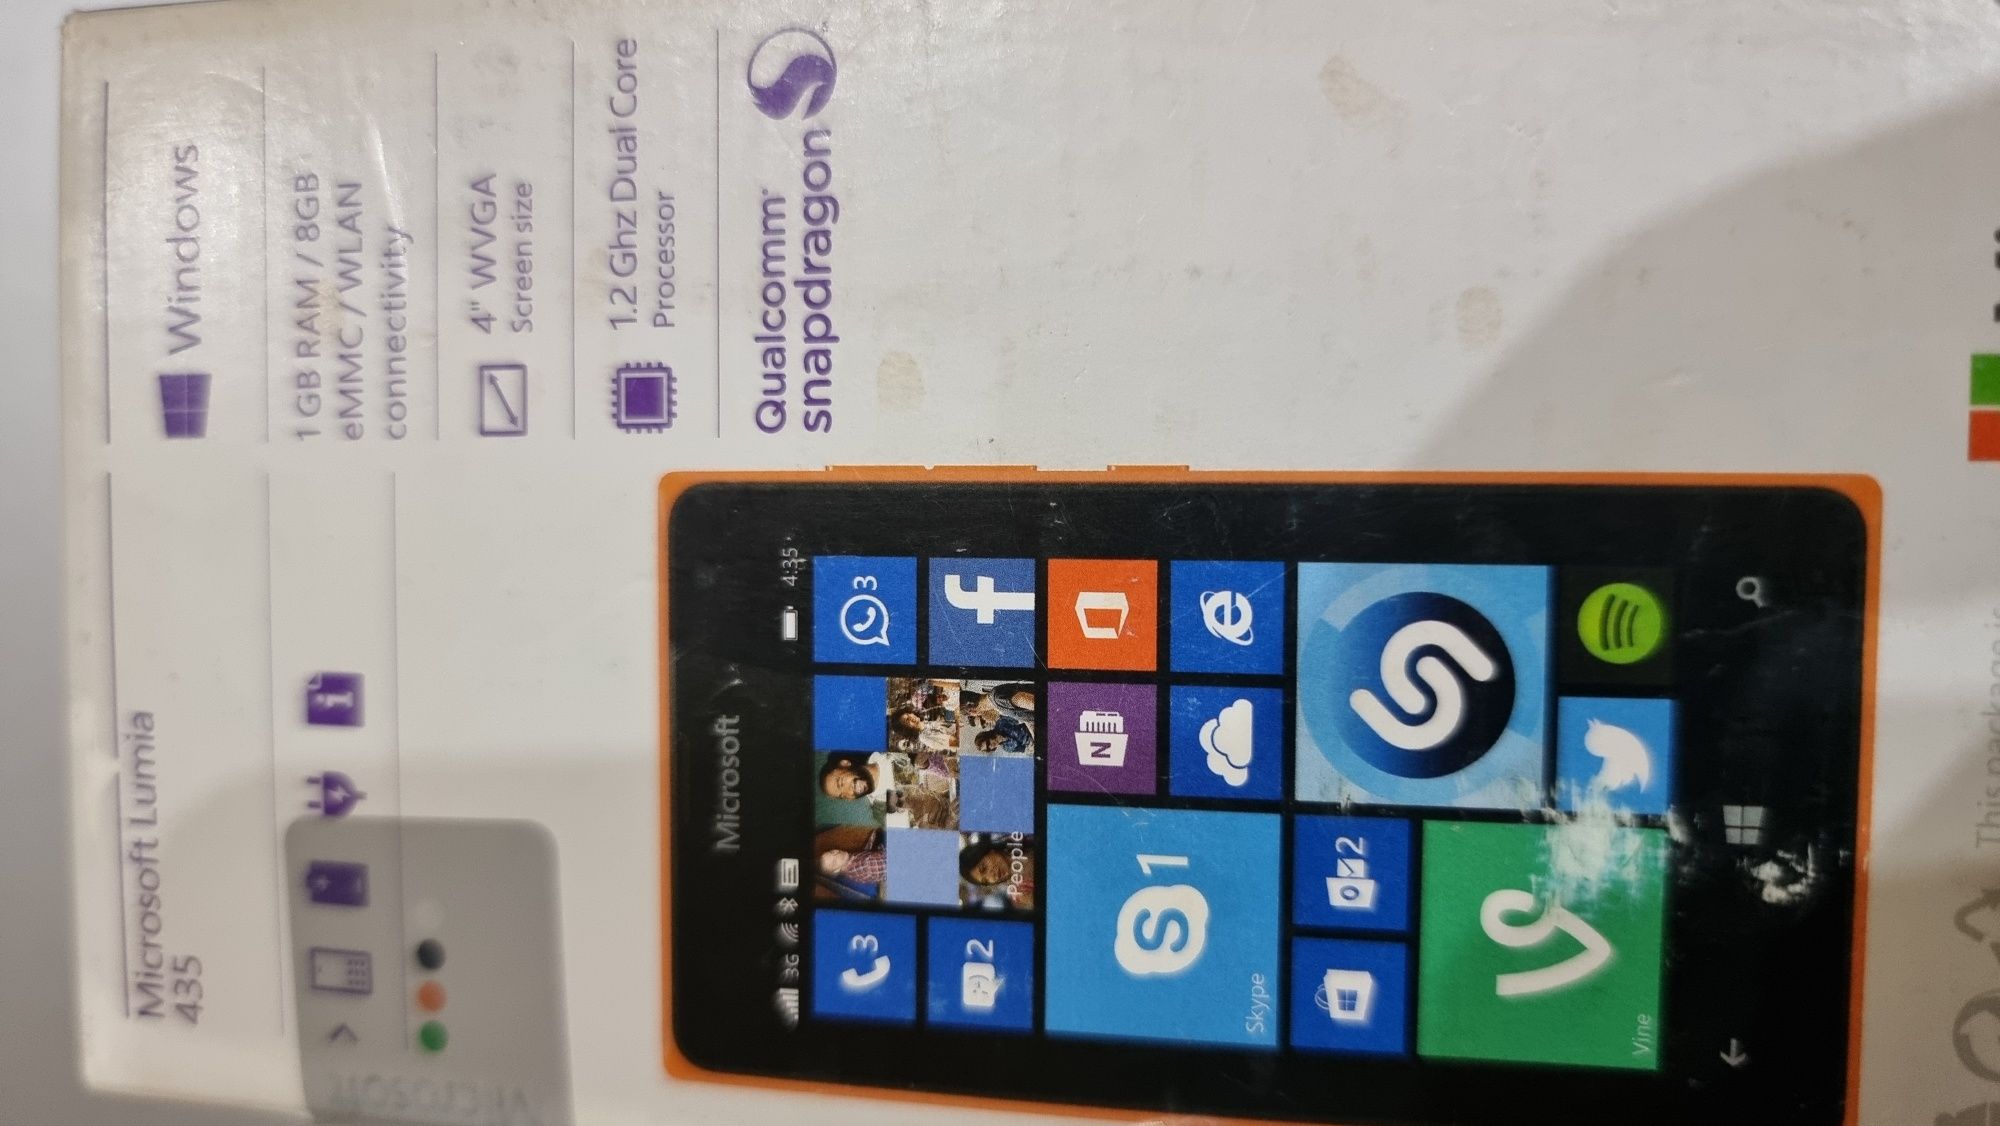 Nokia / Microsoft Lumia 435